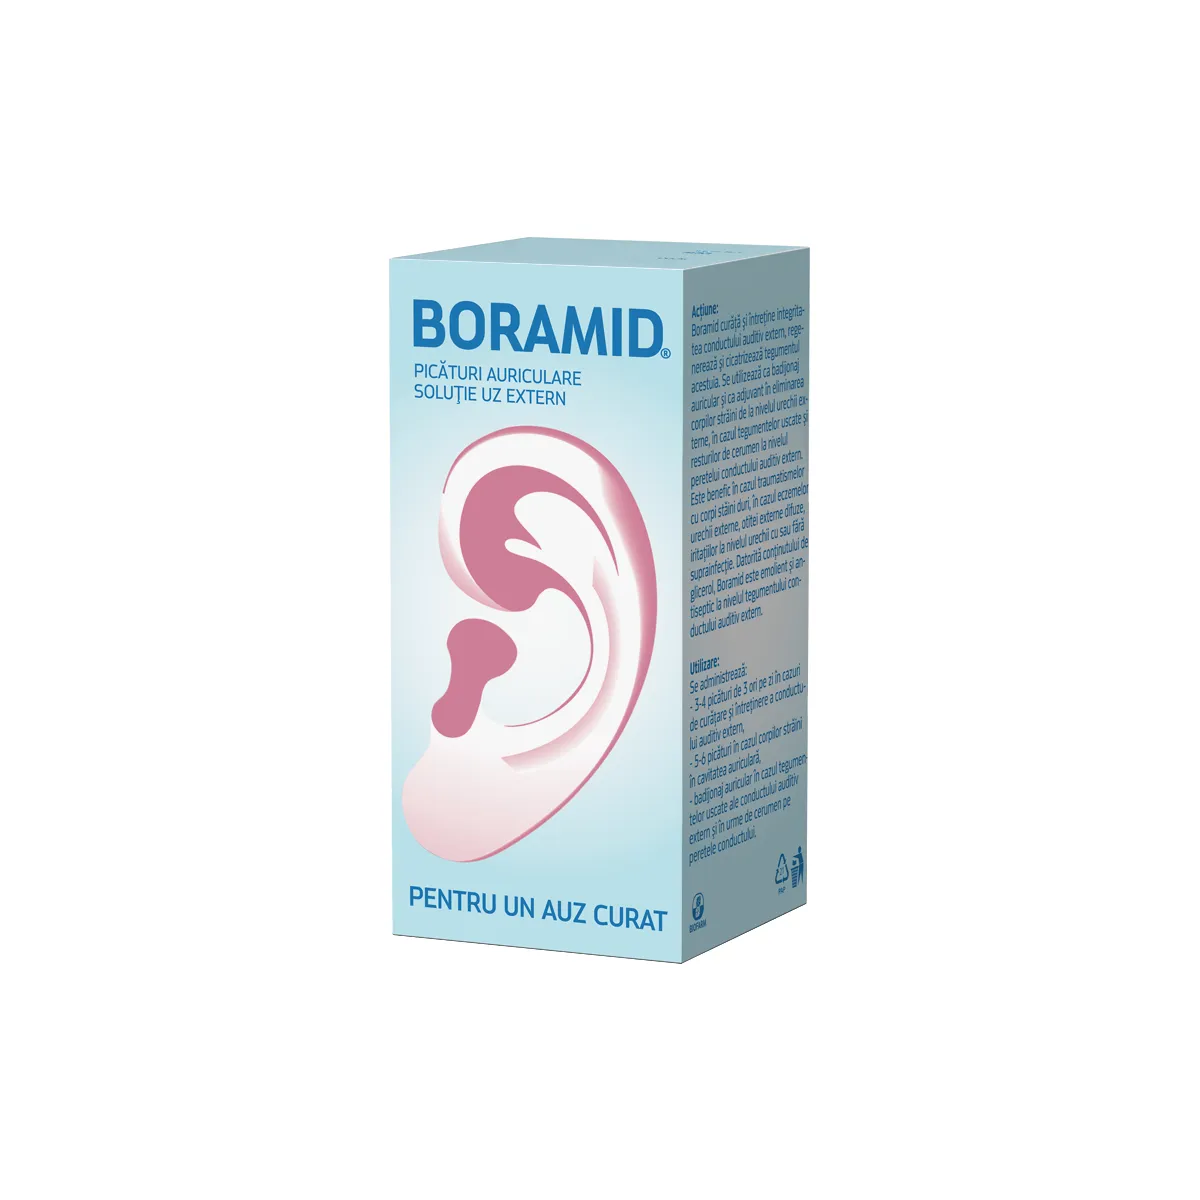 Boramid solutie auriculara 10ml -Biofarm